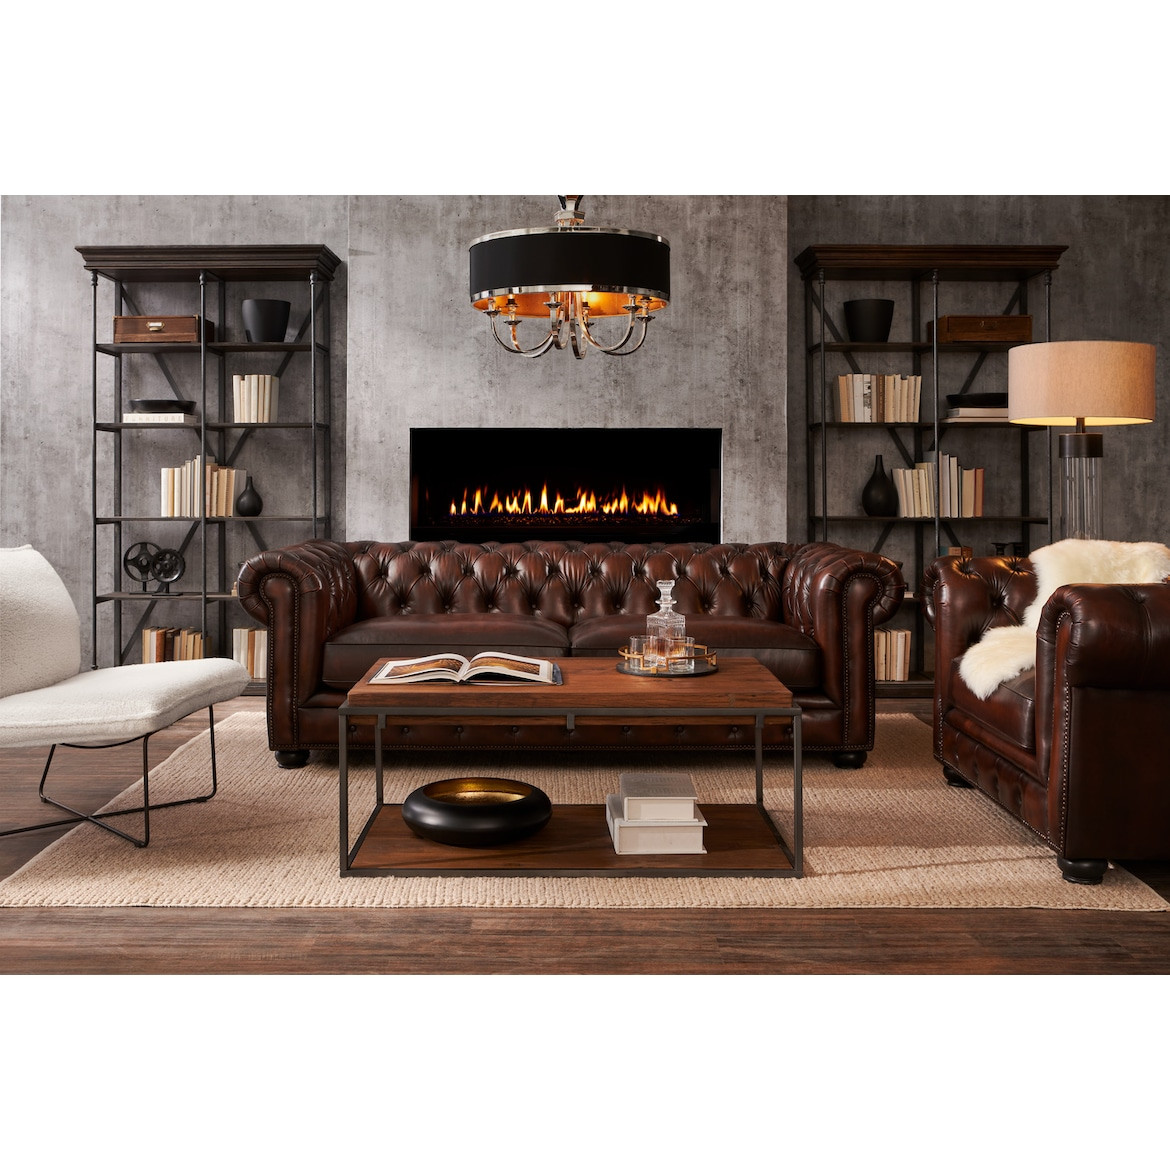 Value City Living Room Tables
 Lexington Sofa